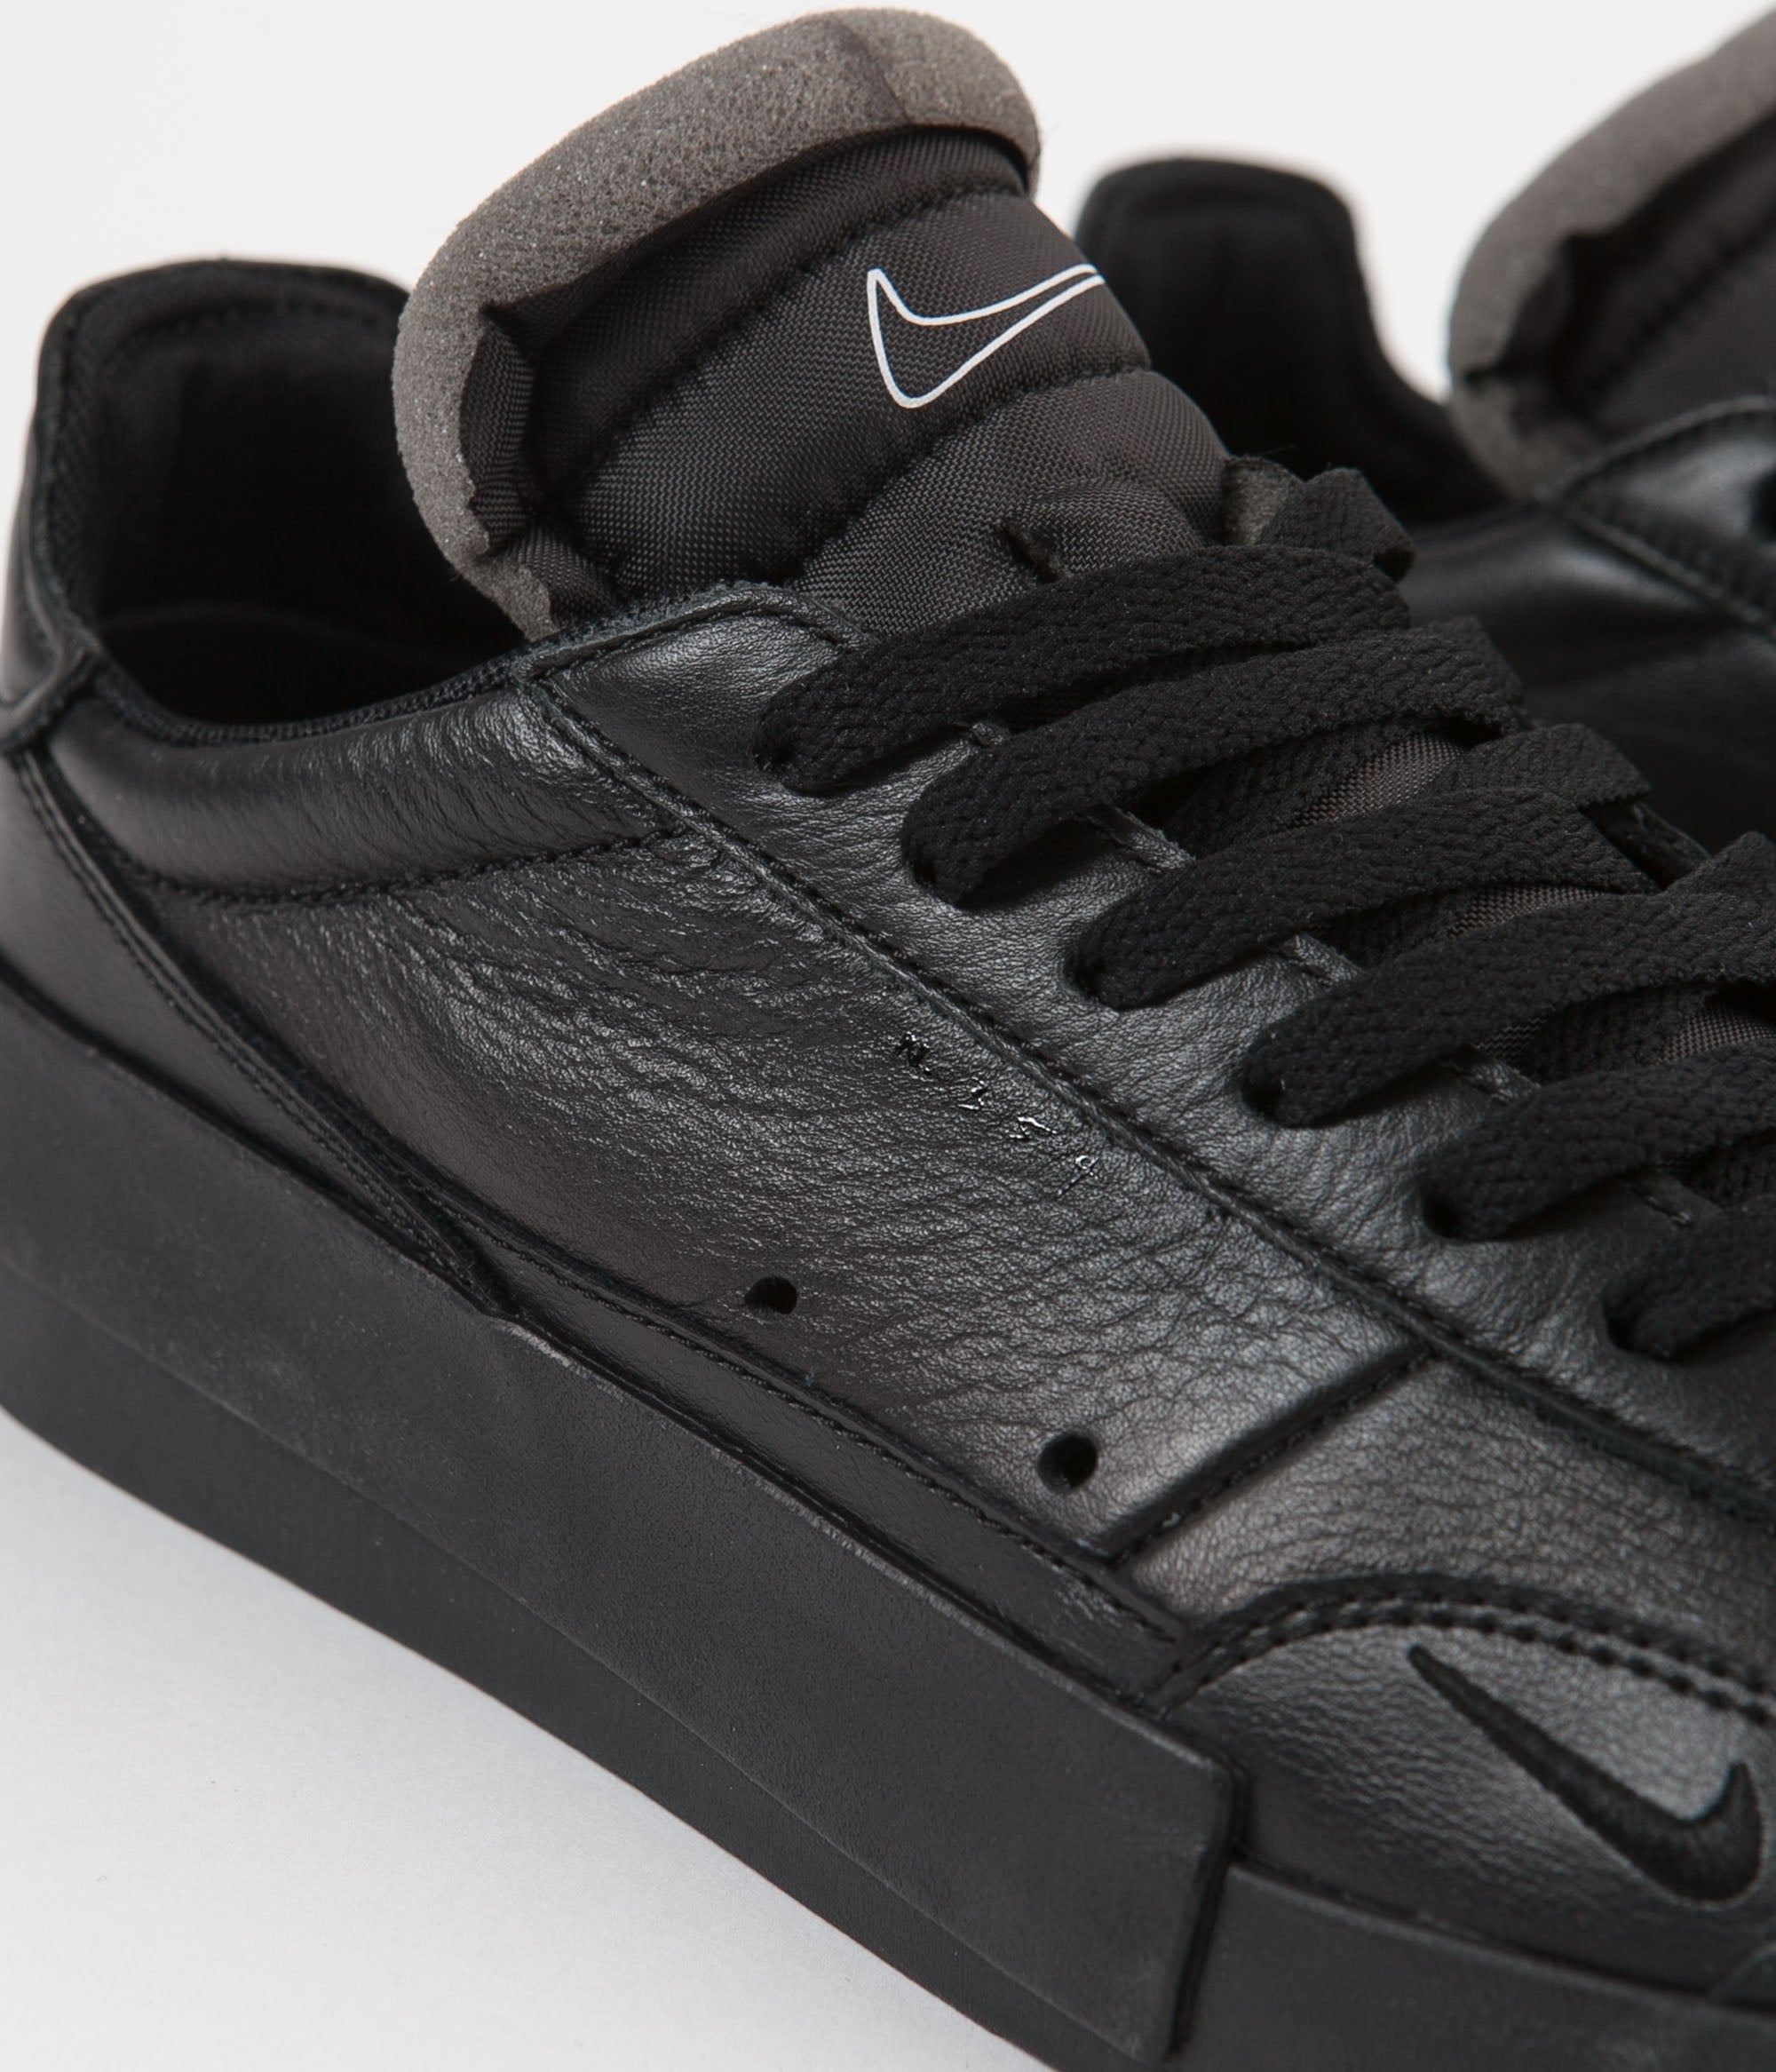 Nike Drop Type Premium Shoes - Black 